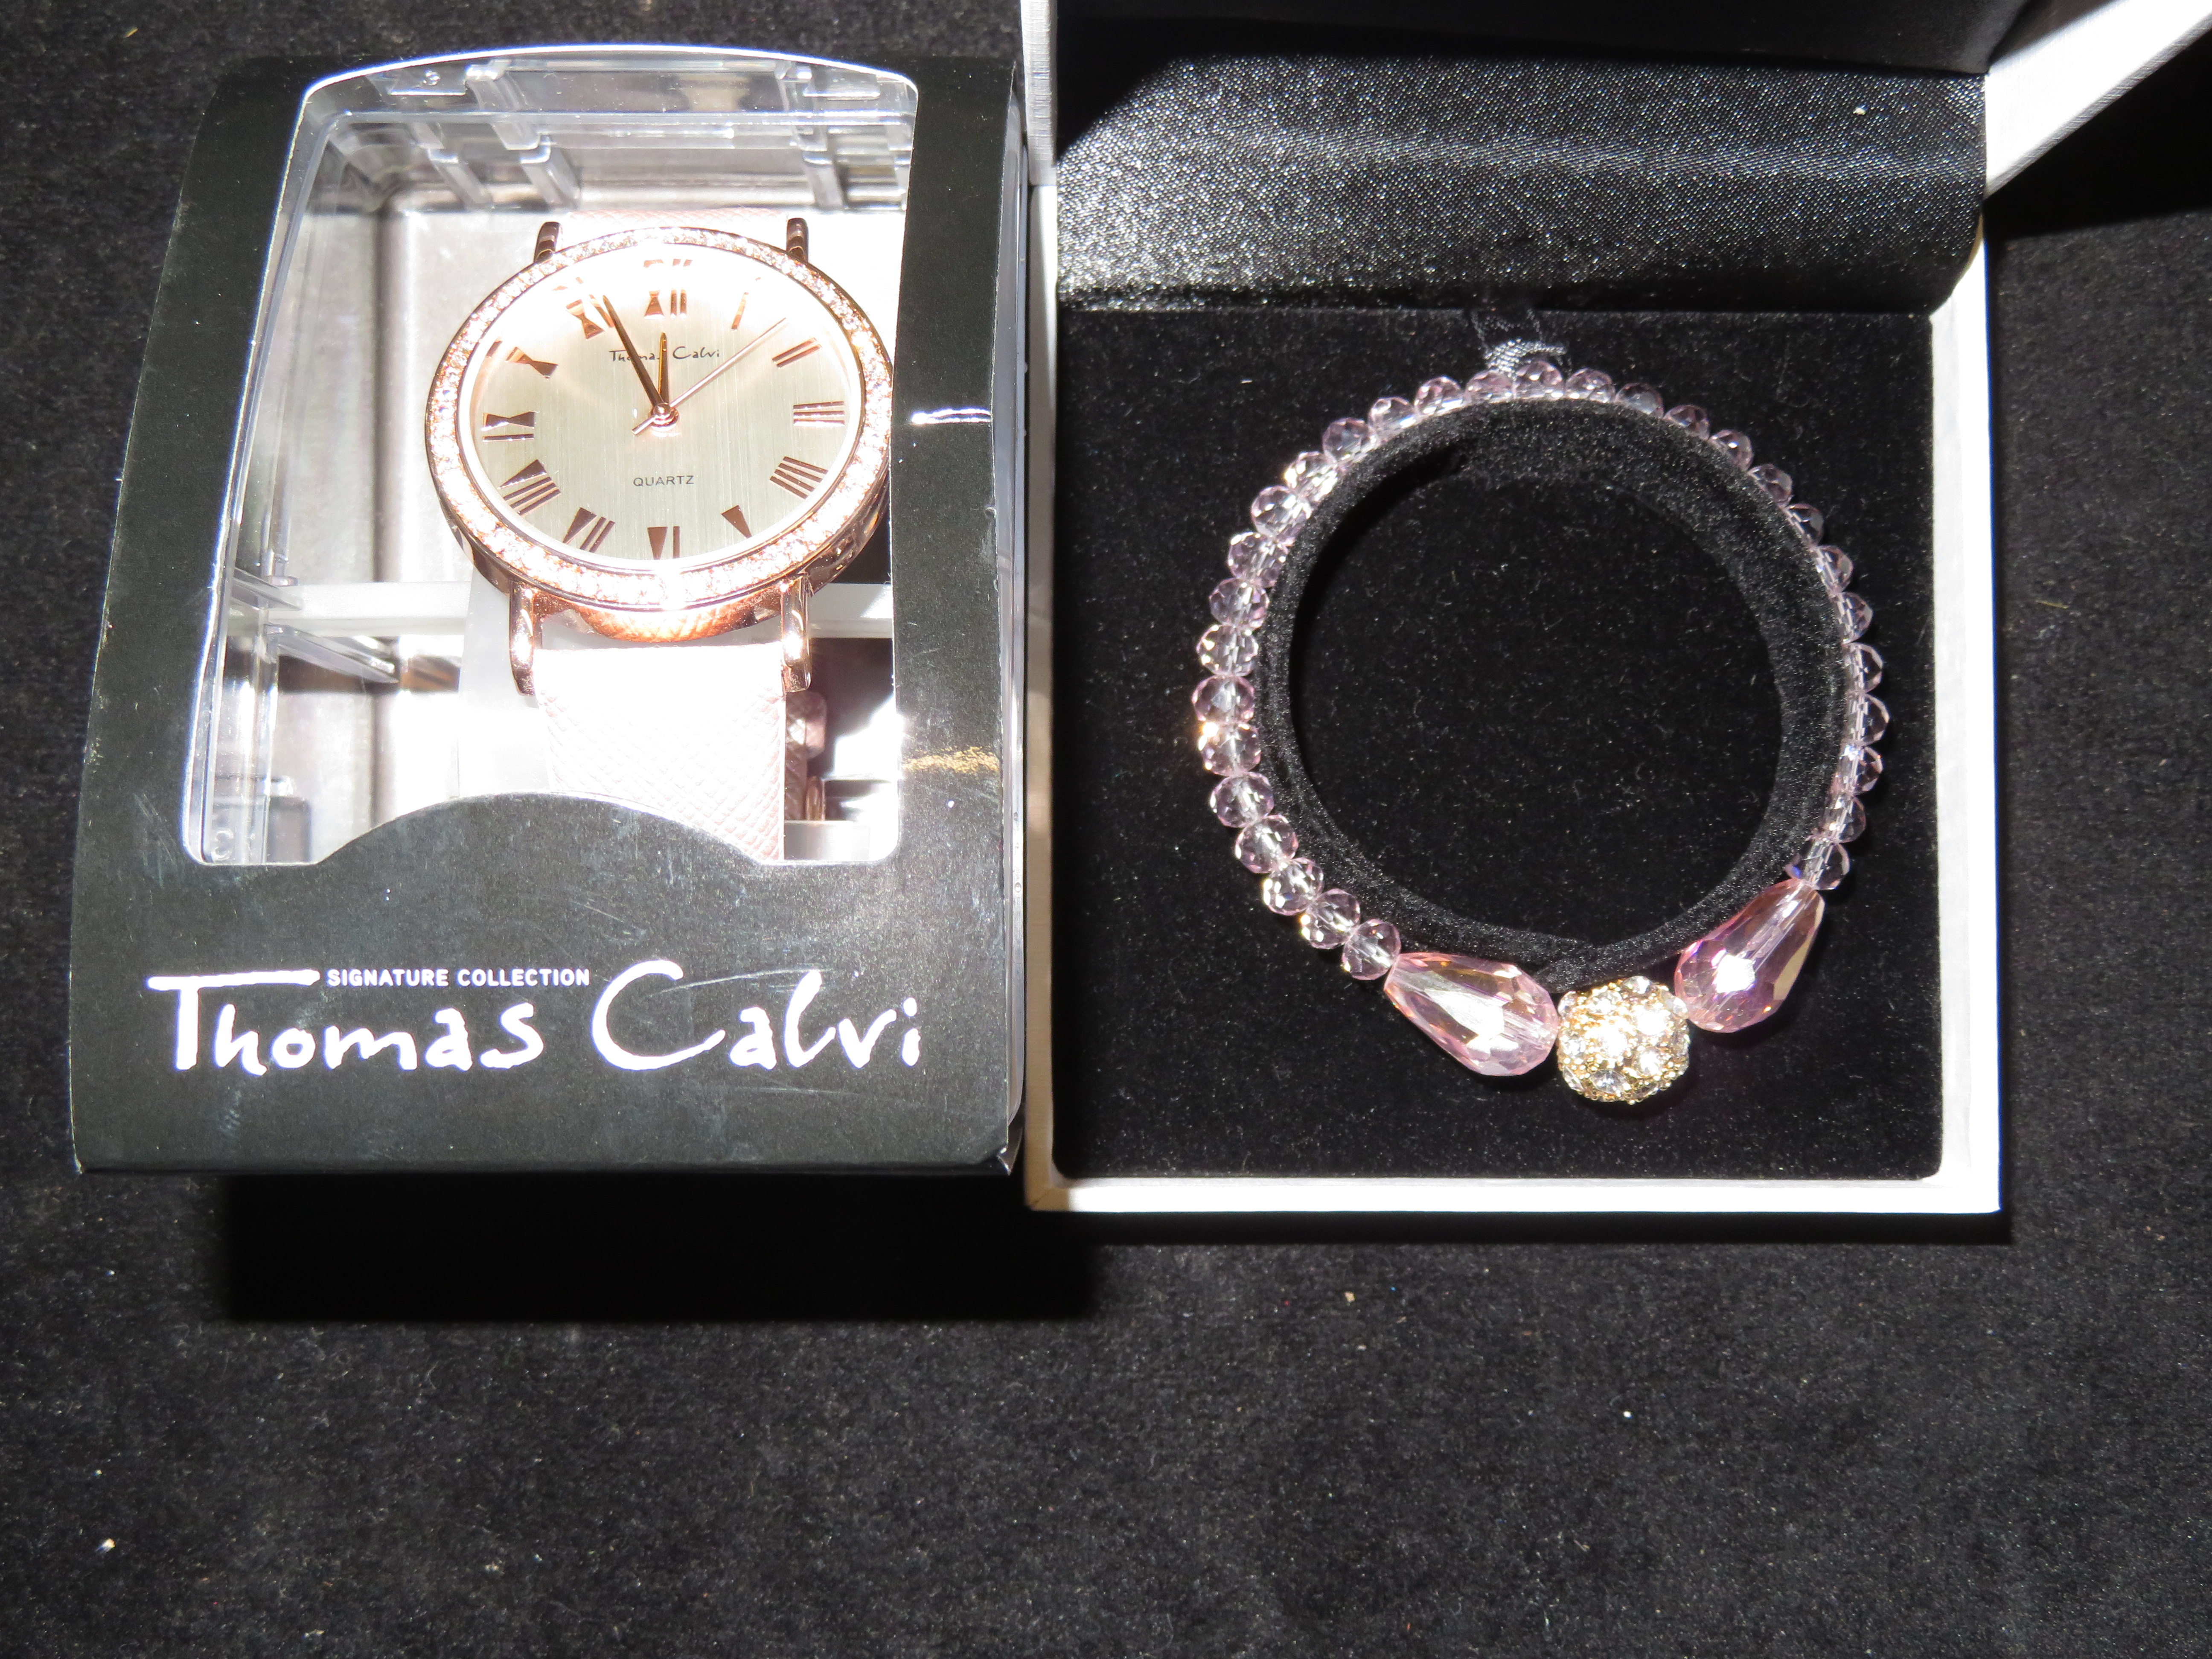 Thomas Calvi wristwatch & bracelet